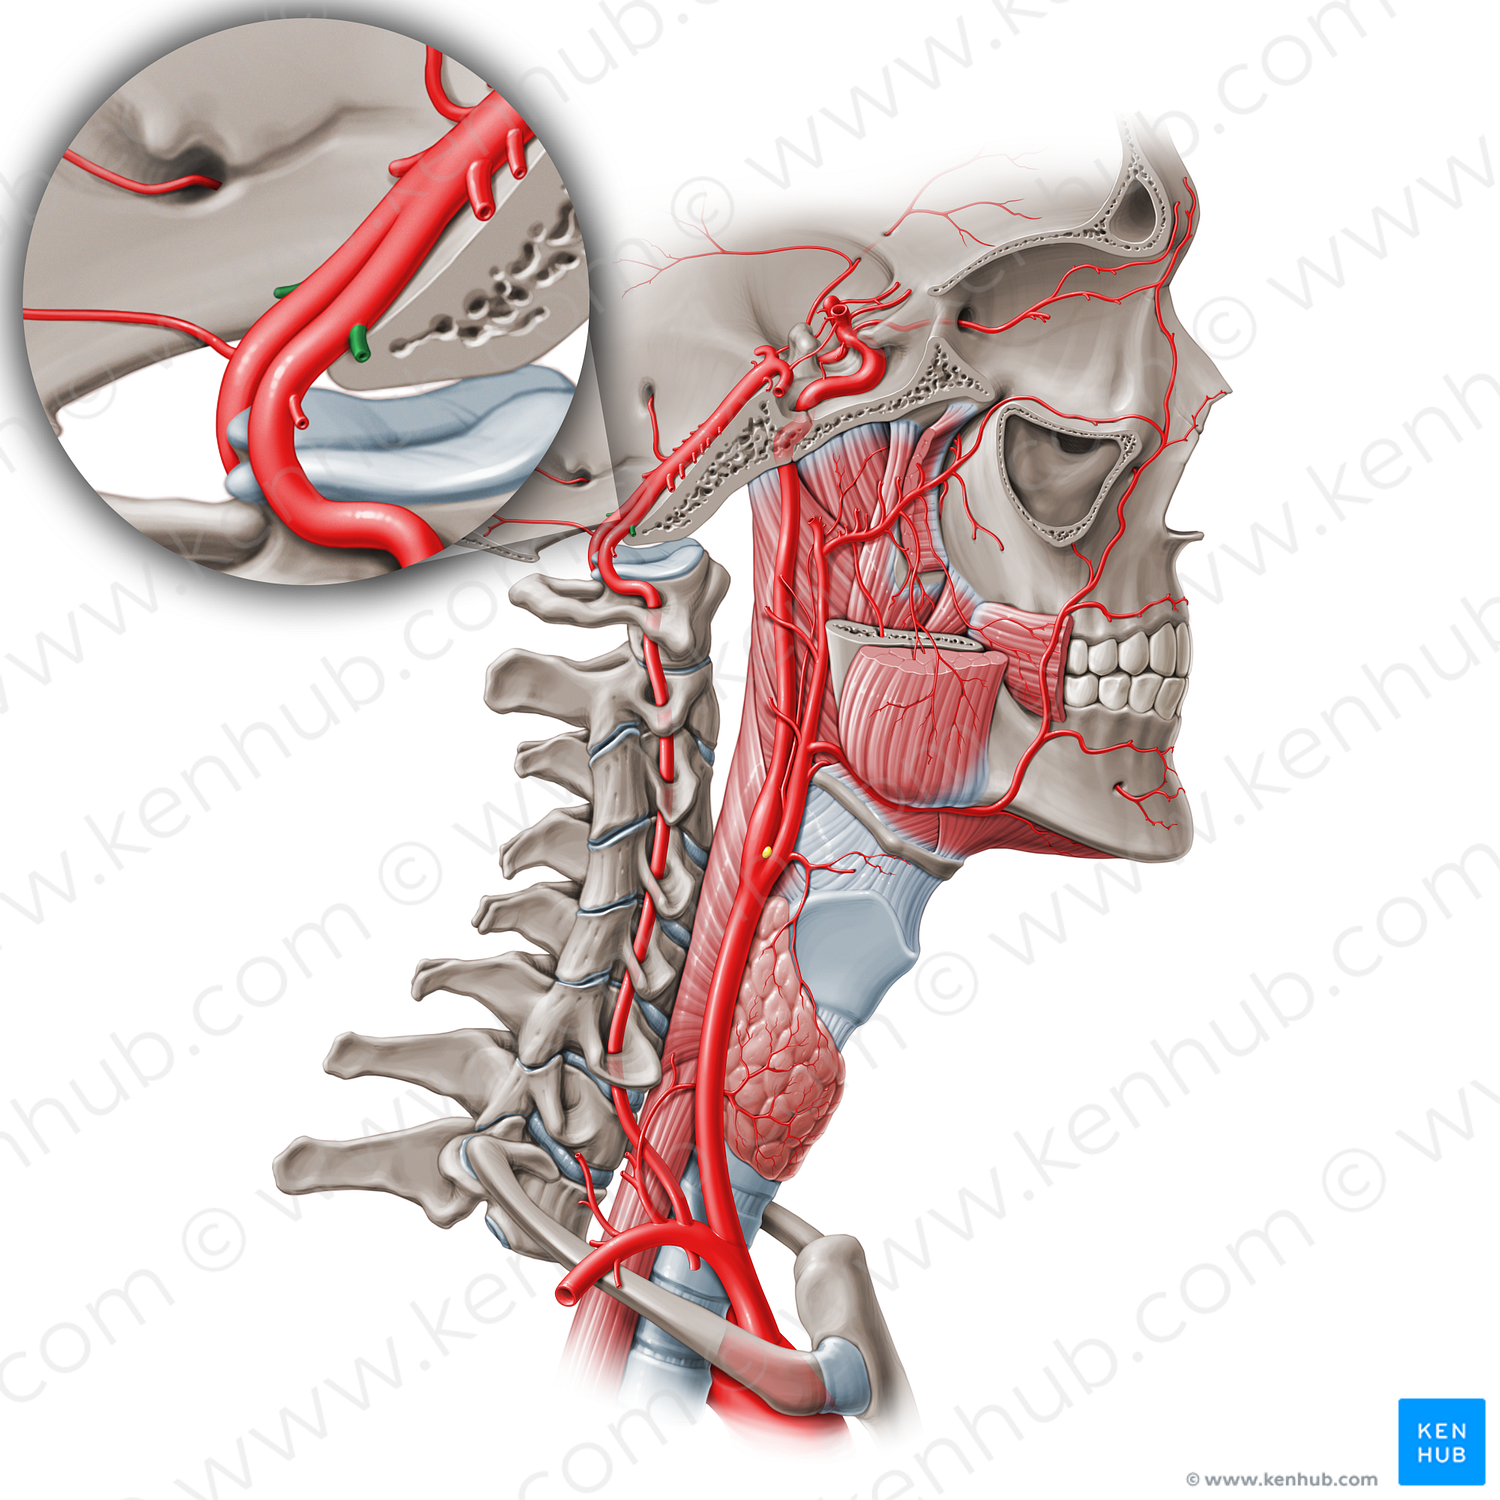 Posterior inferior cerebellar artery (#1004)